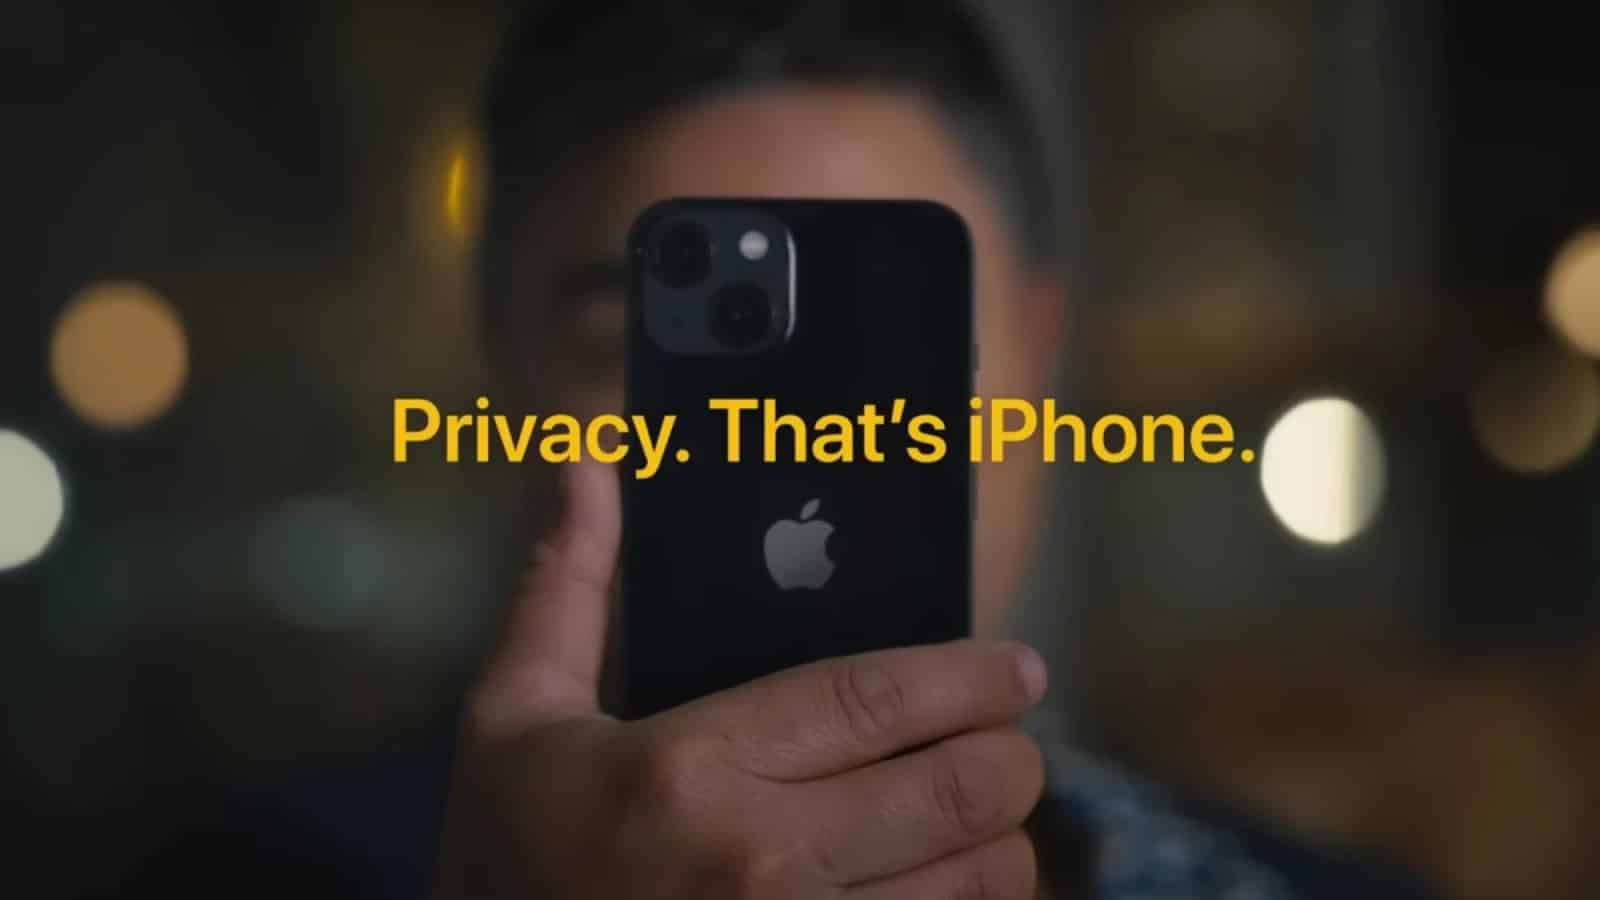 iphone apple, Πώς το iPhone προστατεύει την ιδιωτικότητα – Η μικρού μήκους ταινία της Apple με άρωμα Ted Lasso